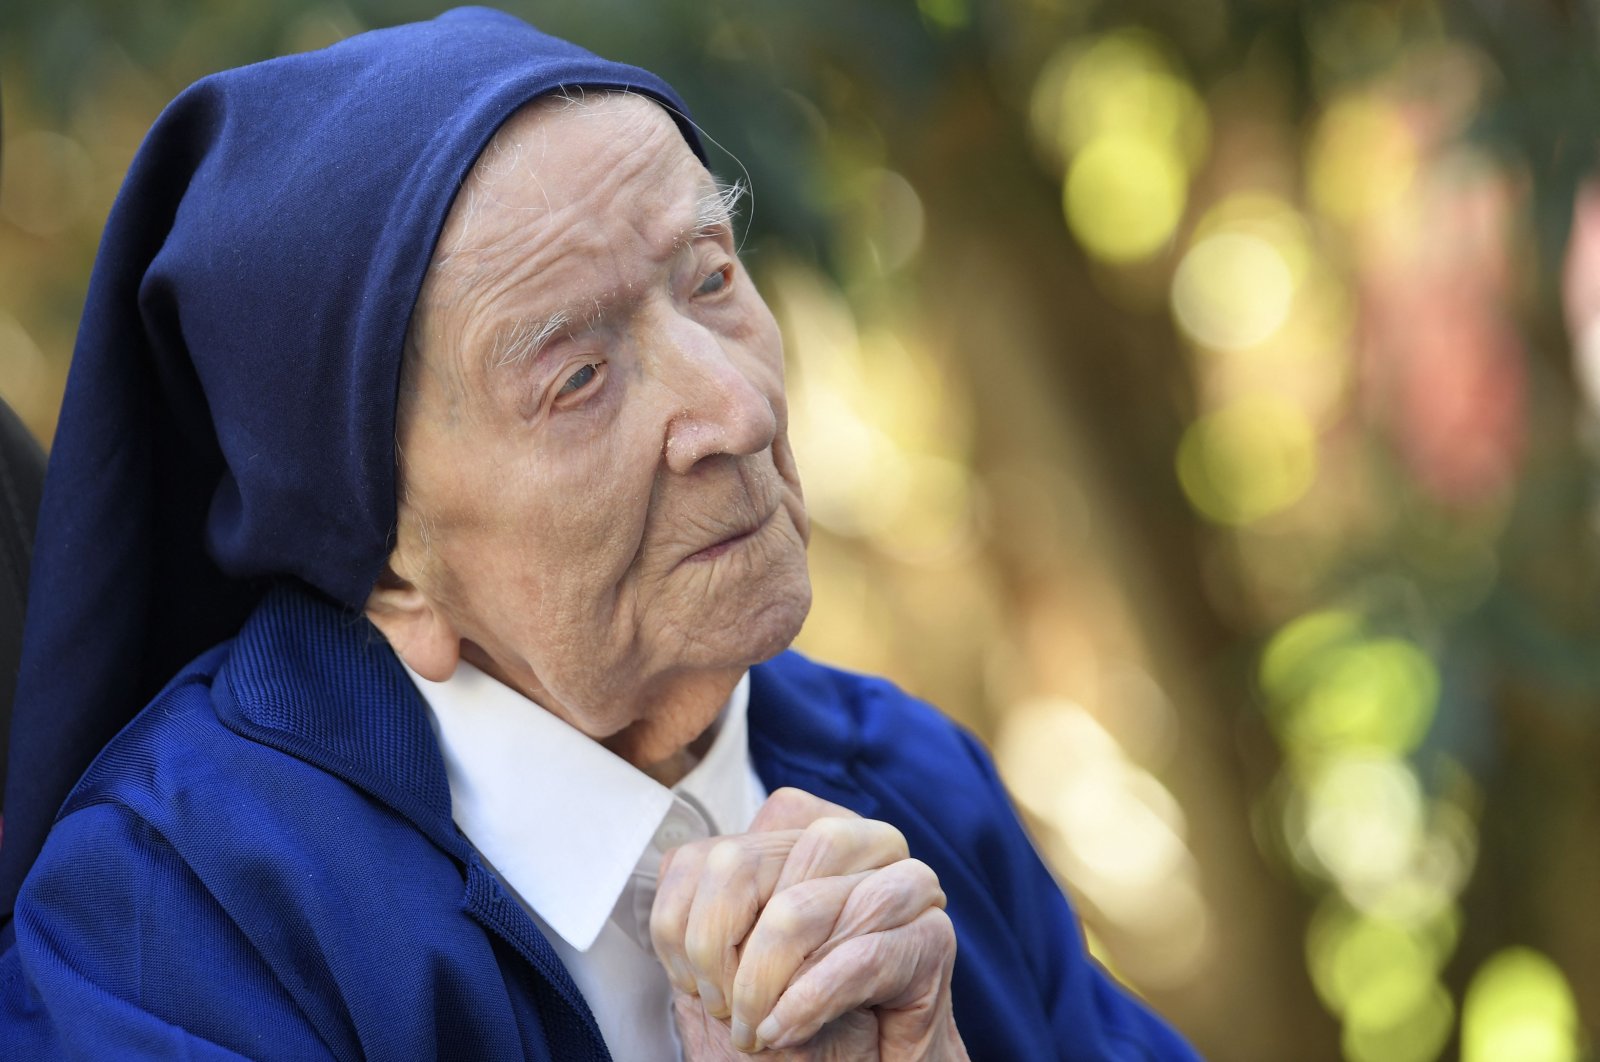 Orang tertua di dunia, biarawati Prancis, meninggal pada usia 118 tahun